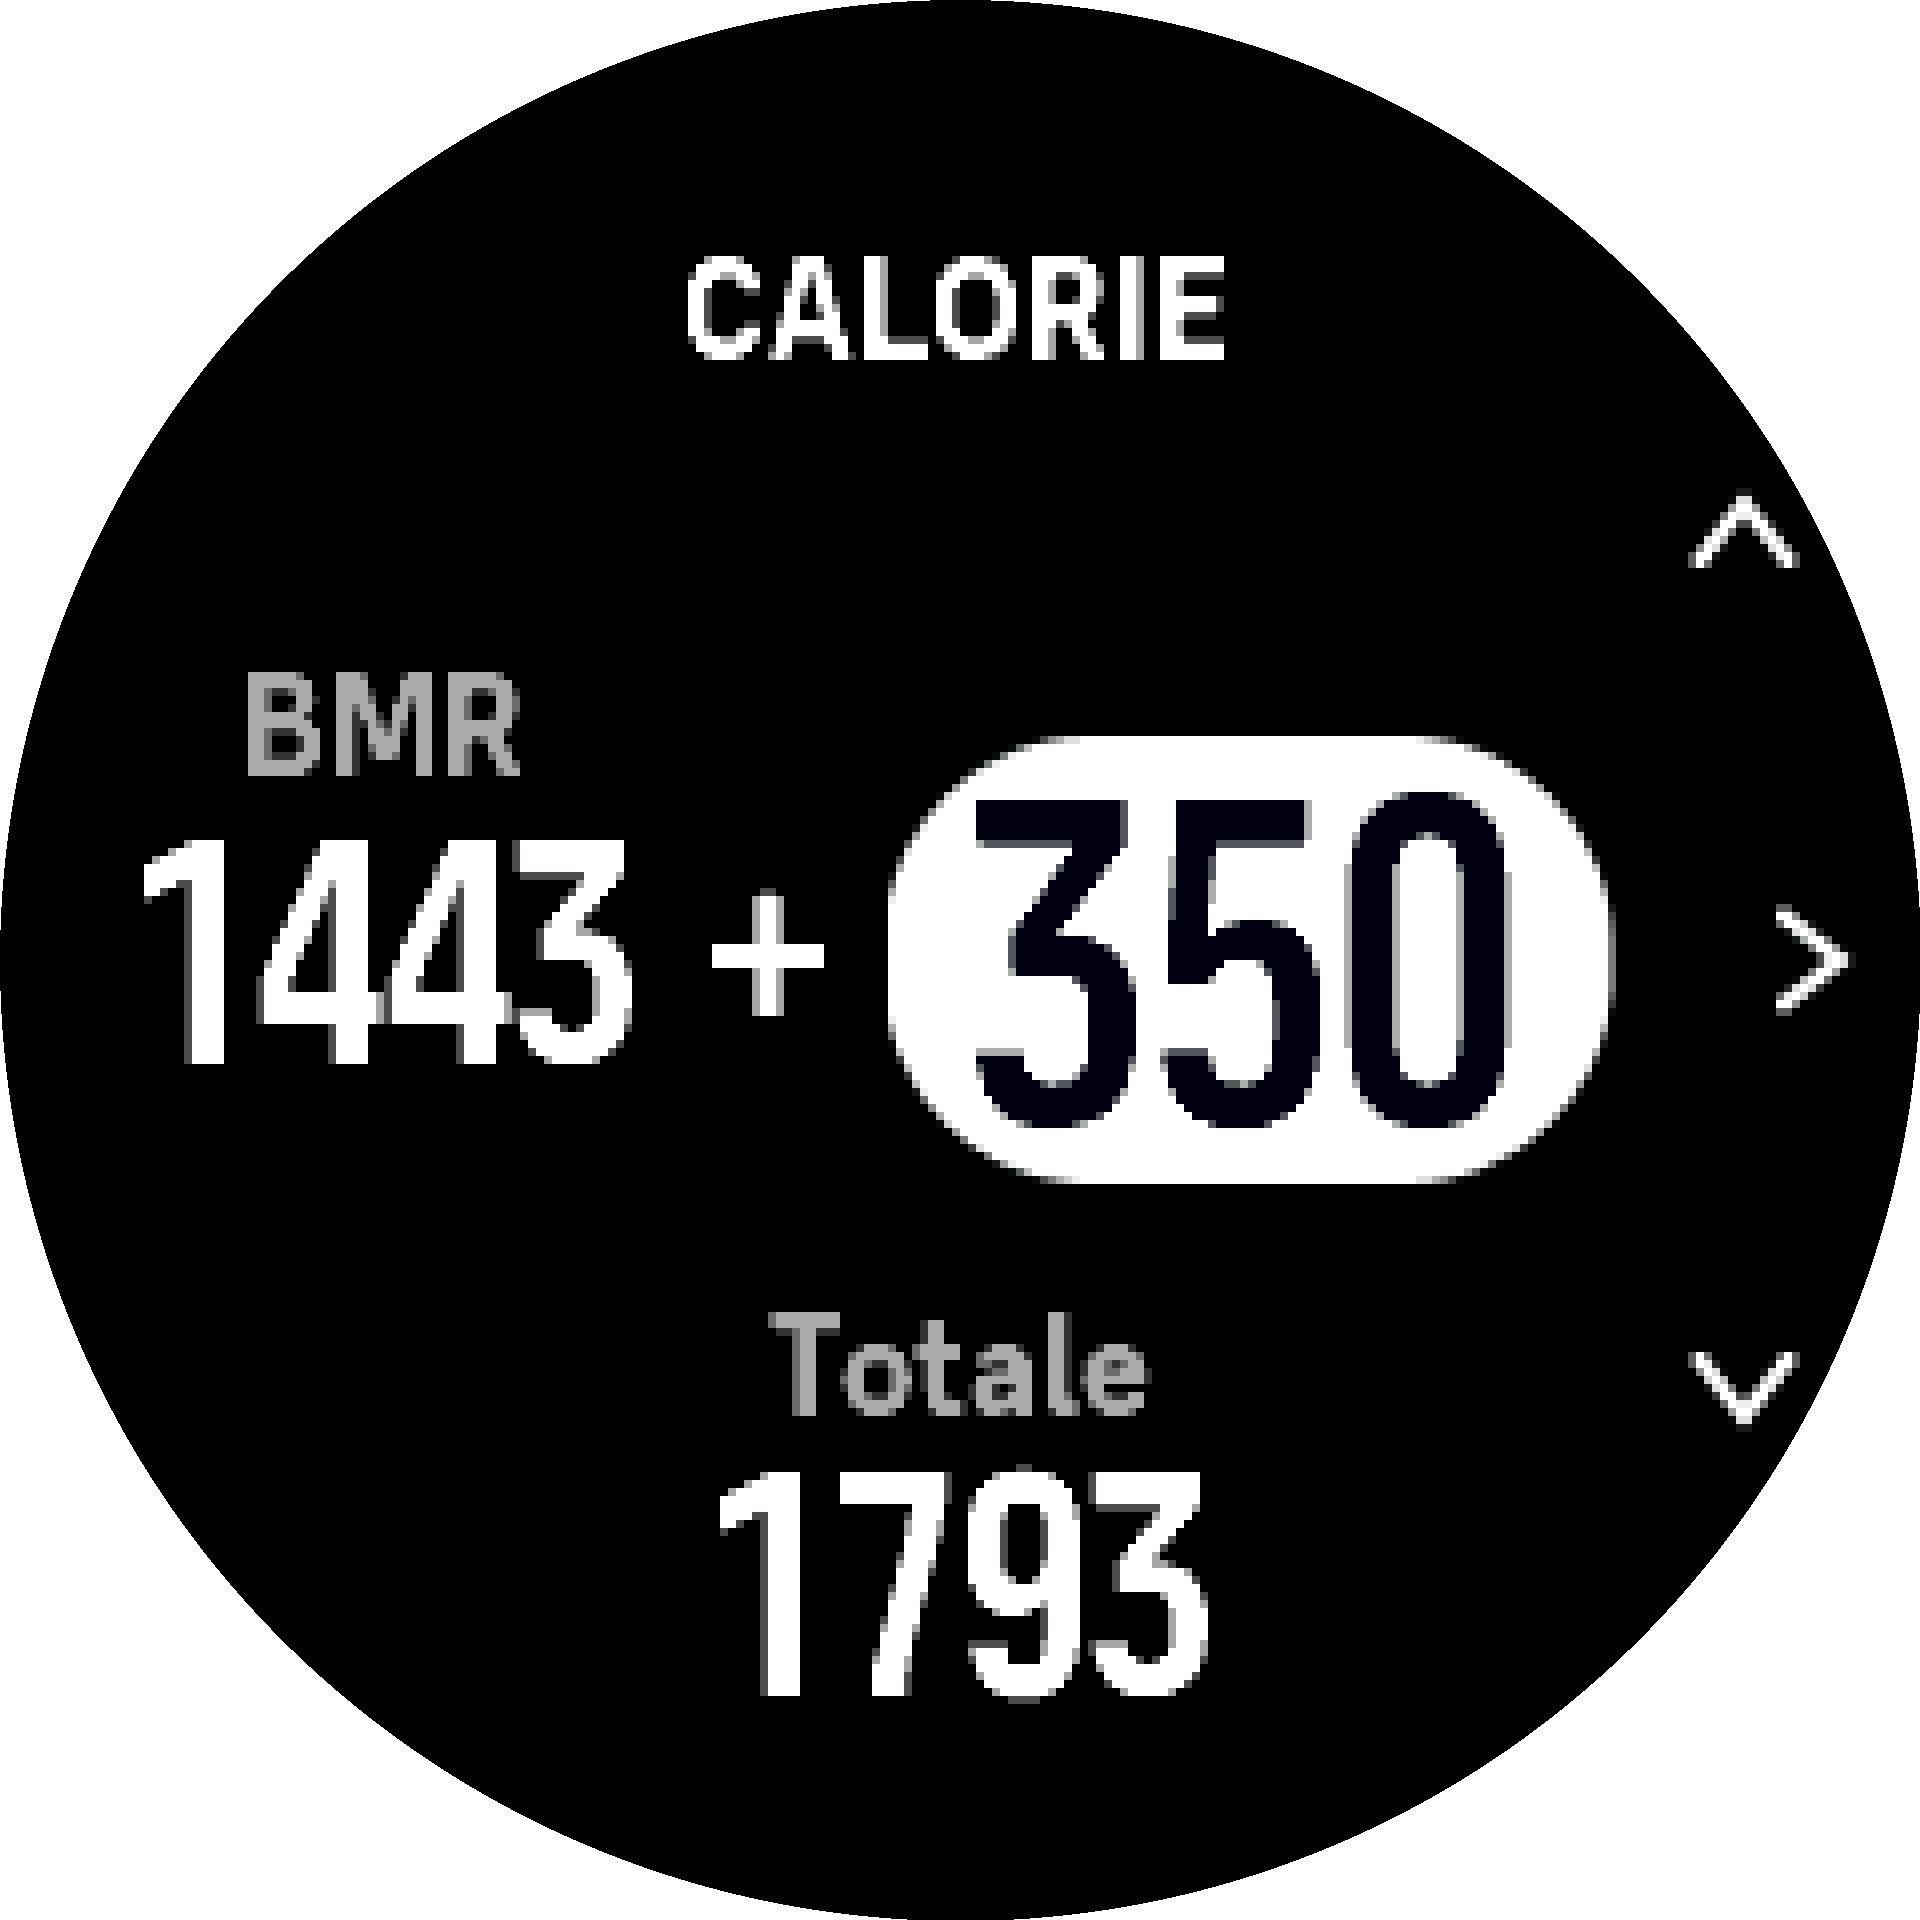 Calorie totali